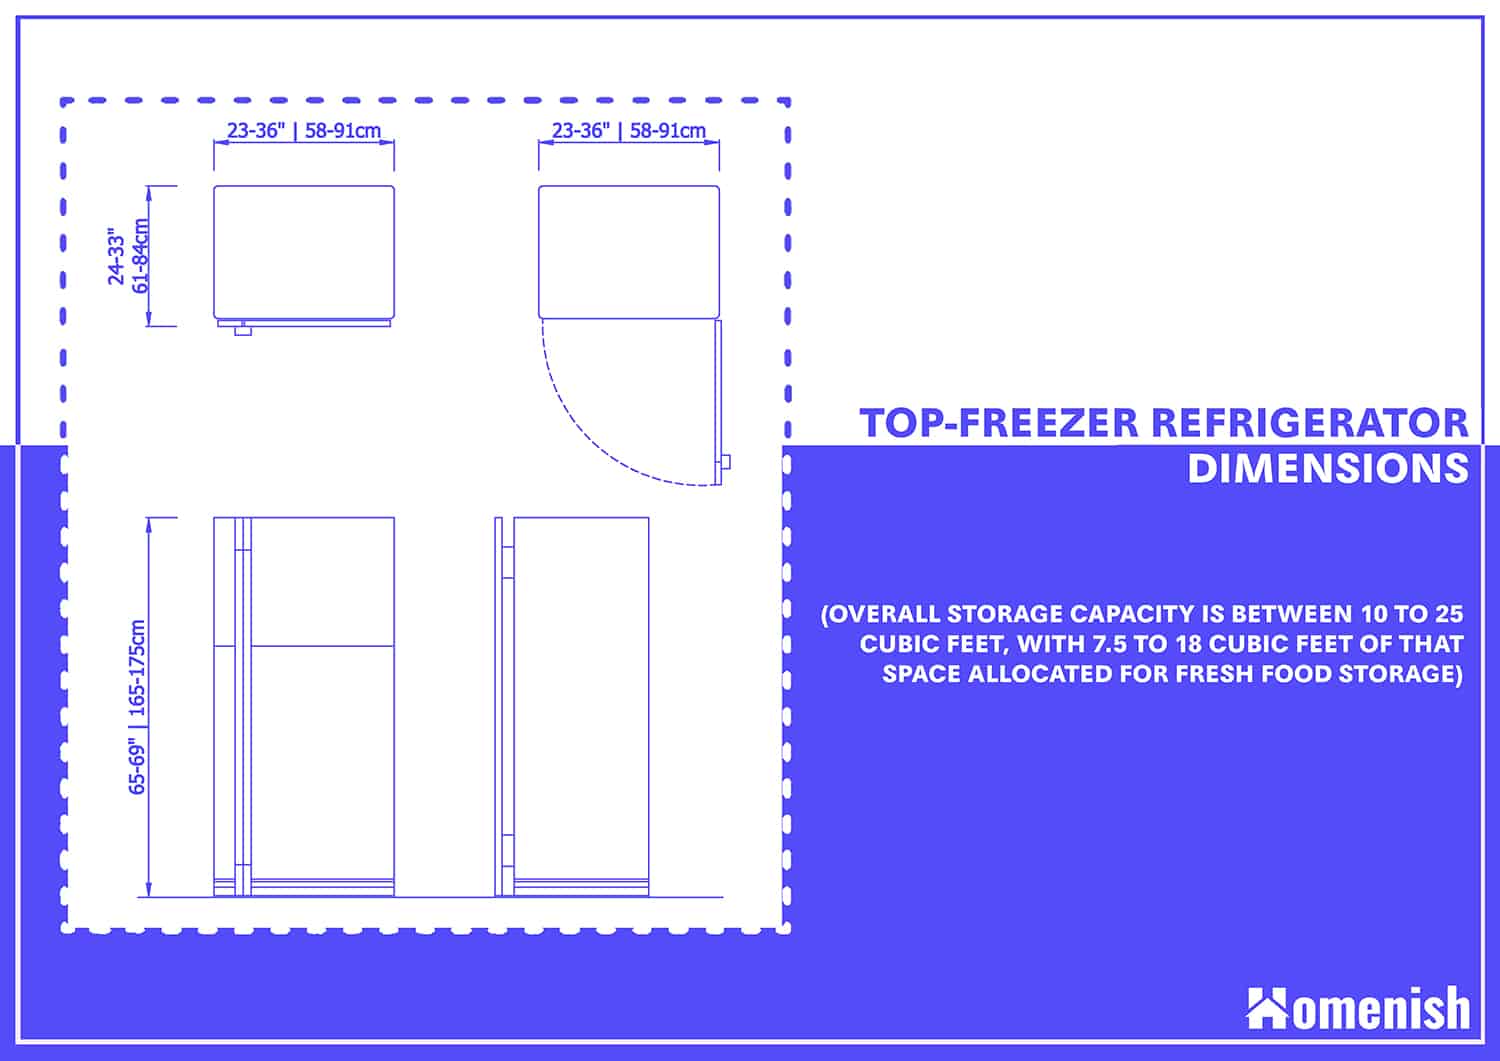 Top-freezer冰箱尺寸